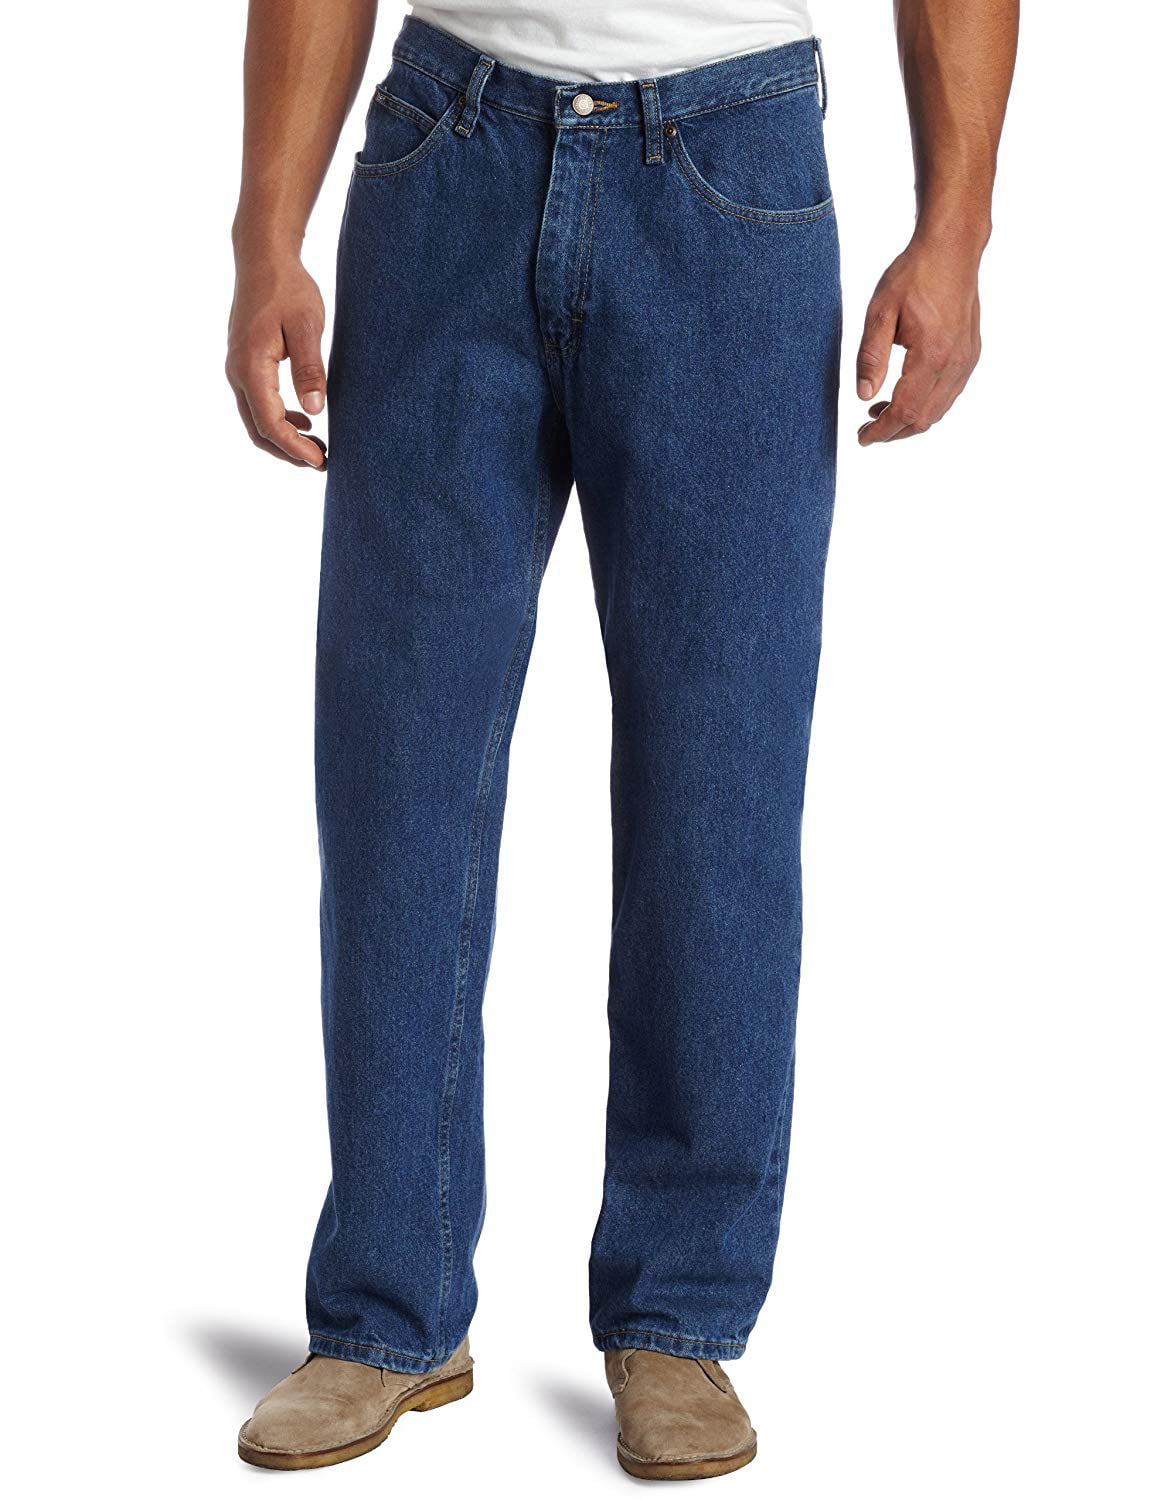 Viazoni Jeans Hugo FEO New modèle 2020 straight fit jeans BEST PRICE 